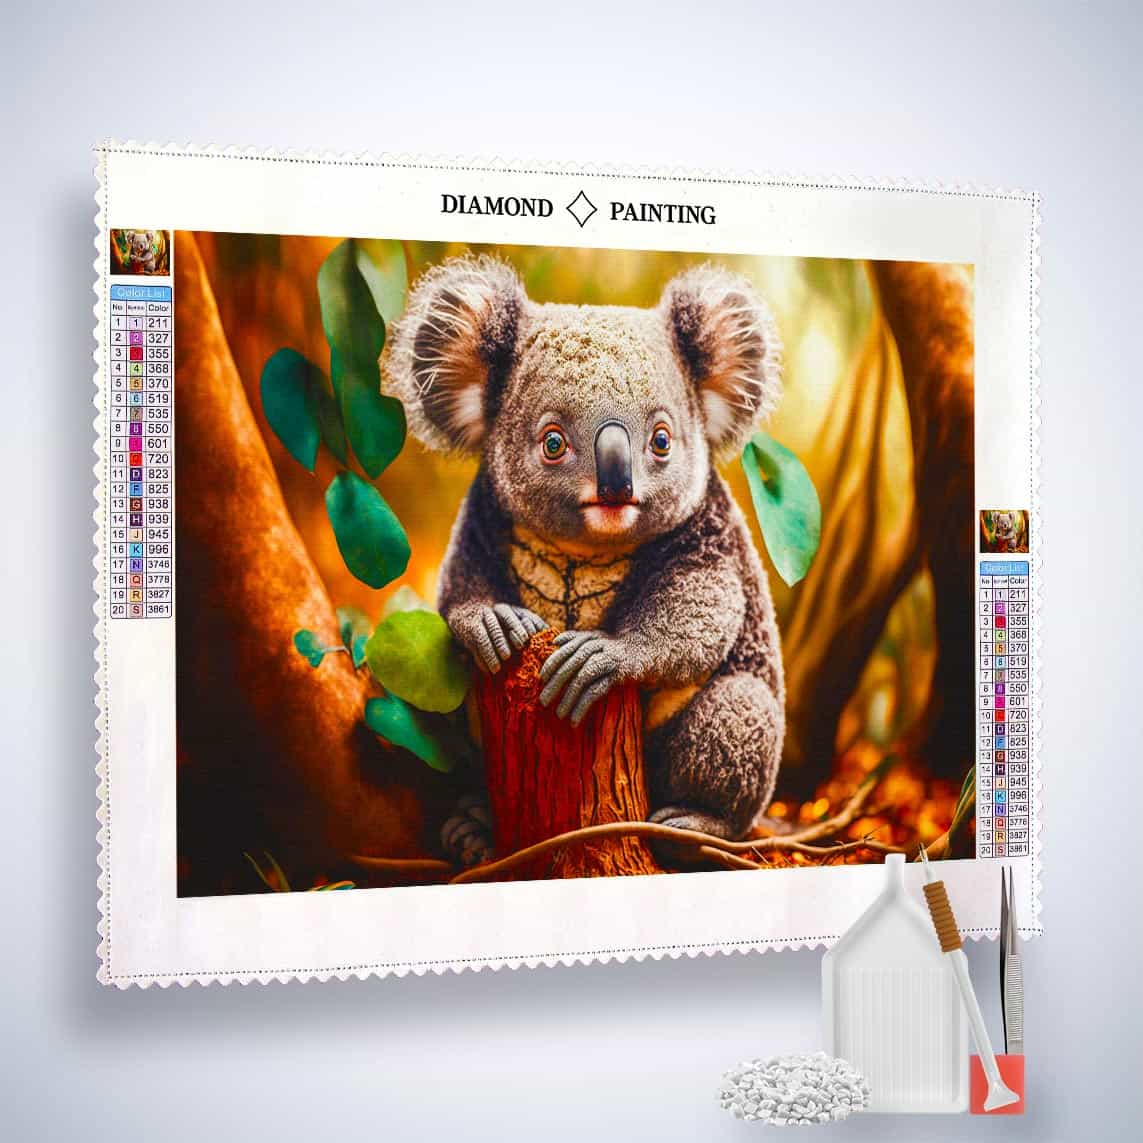 Diamond Painting - Koalabär auf Waldboden - gedruckt in Ultra-HD - Bär, Horizontal, Koala, Tiere